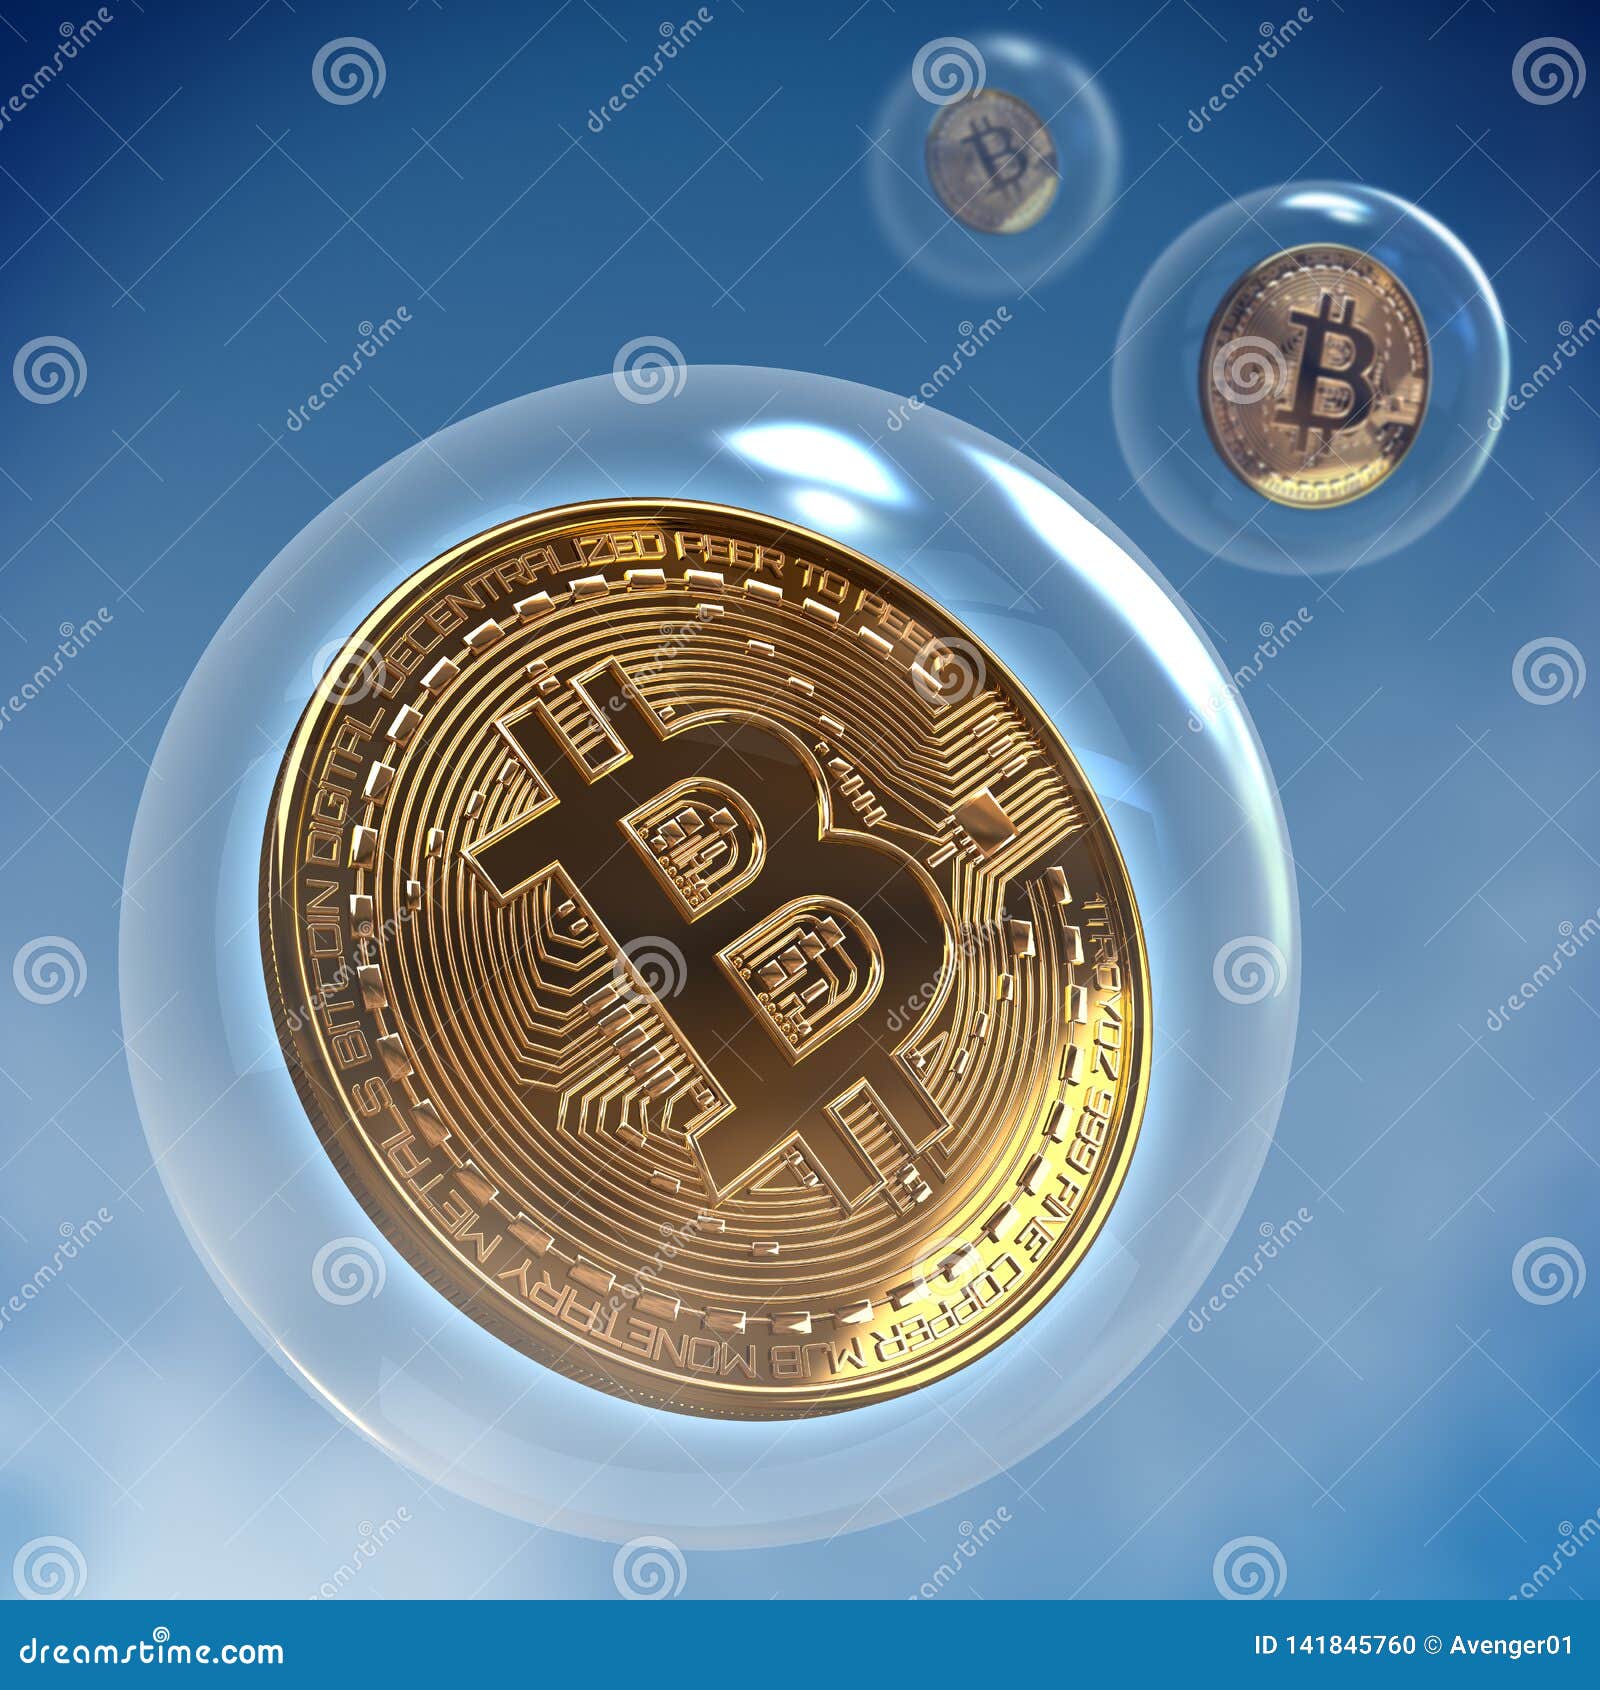 Bubble coin crypto bitcoin dollar cost average calculator